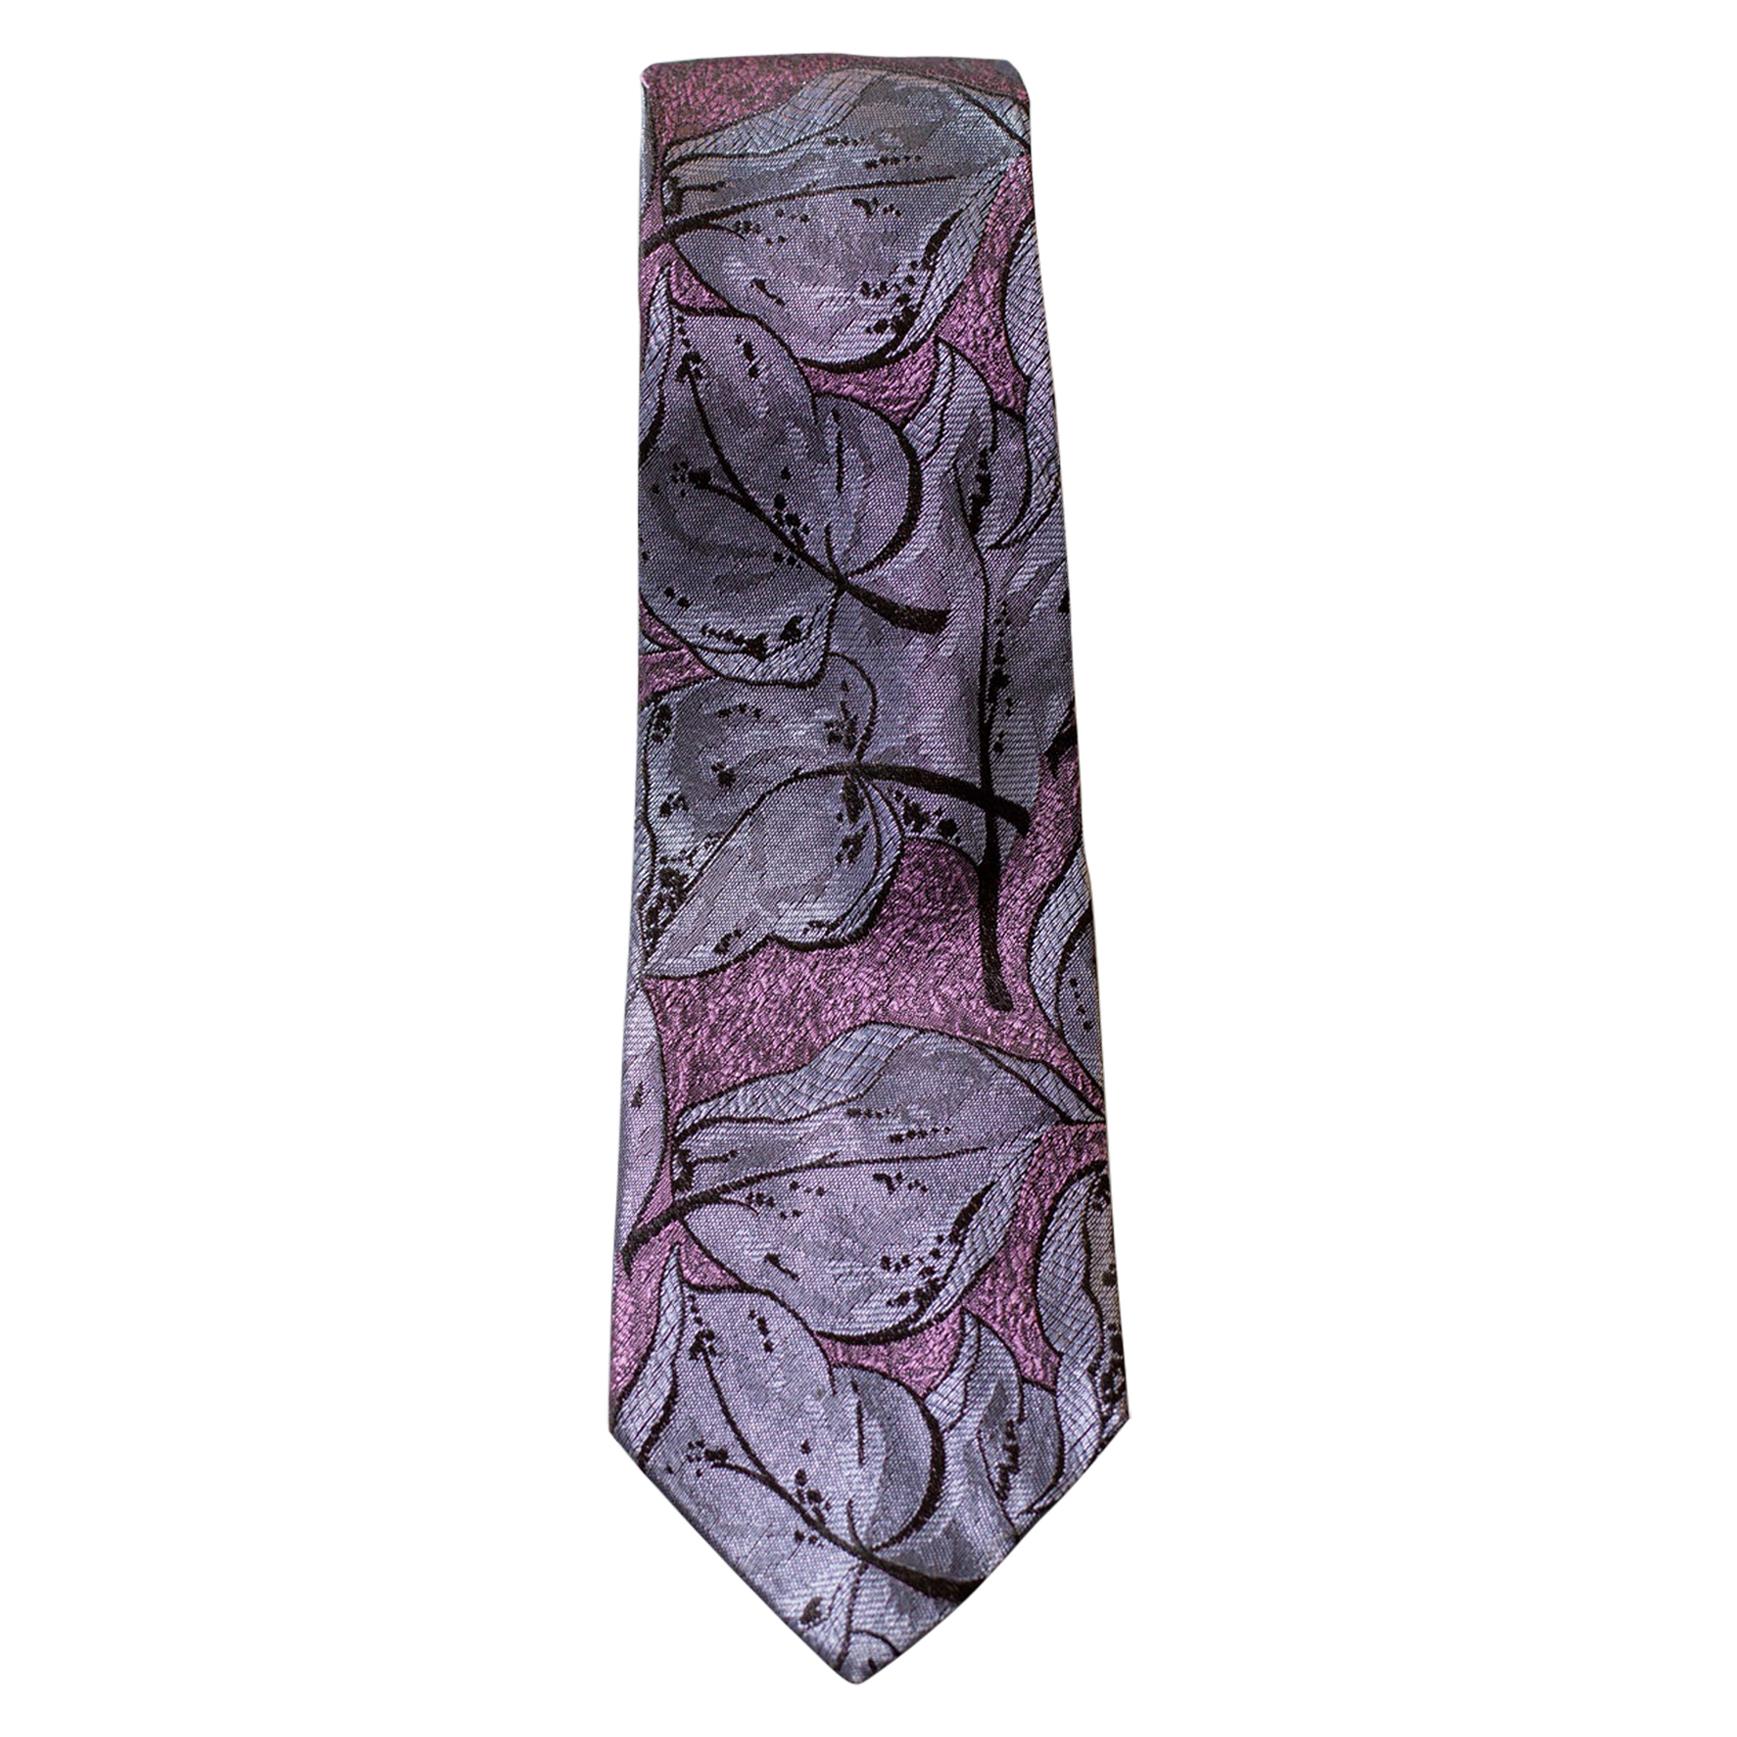 Vintage Mario Ferrari 100% silk tie decorated with lilac flowers